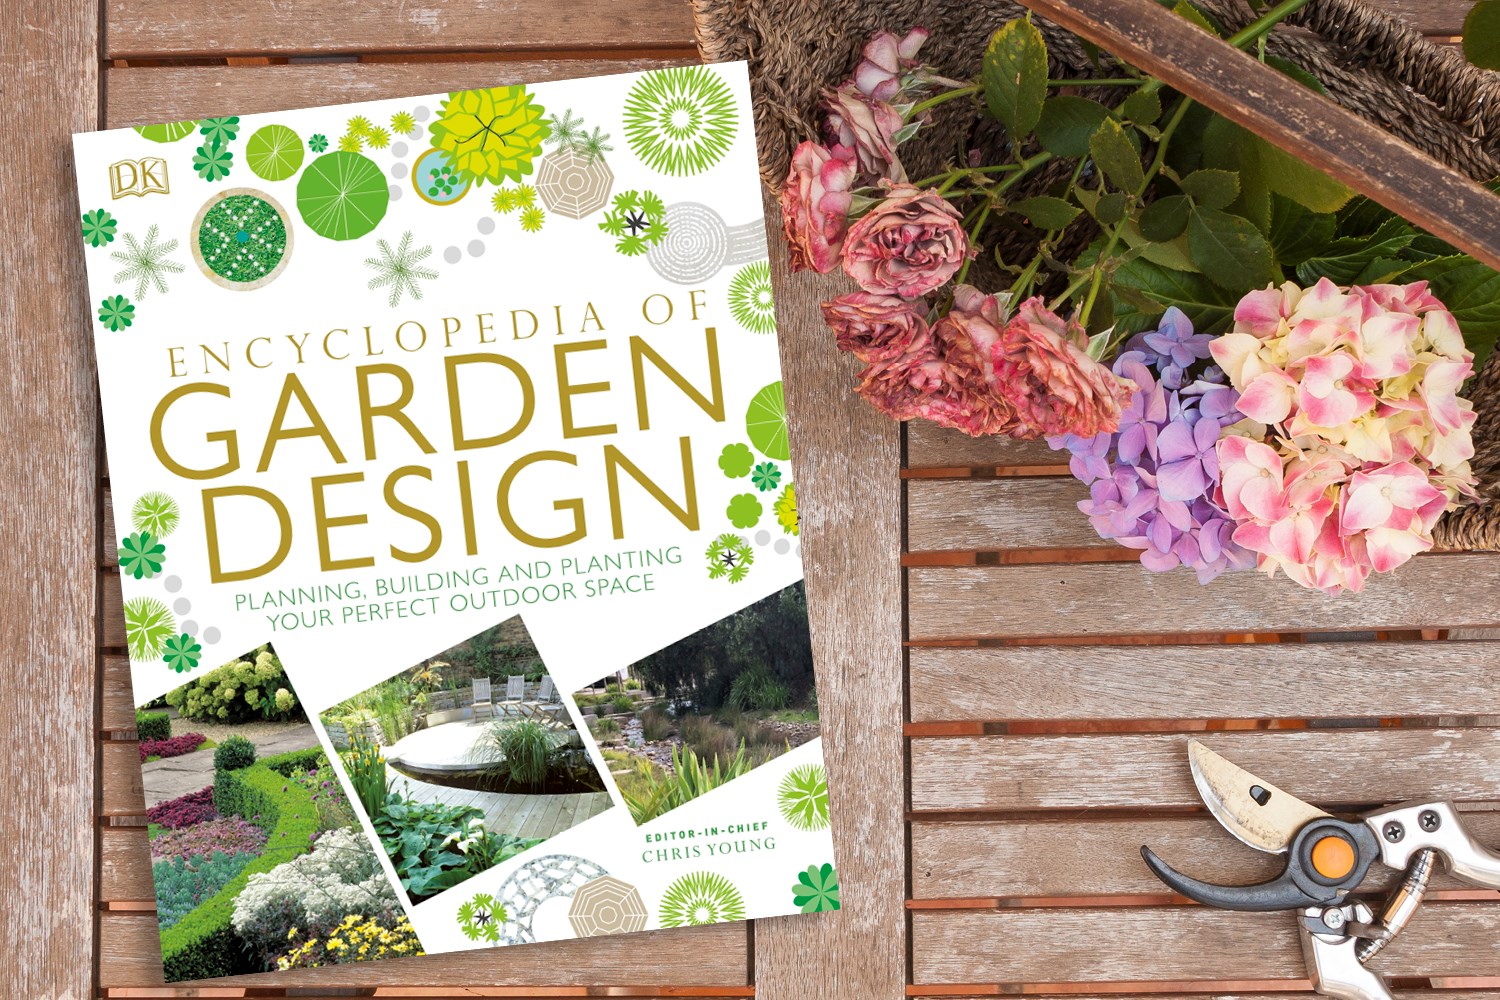  garden design reading